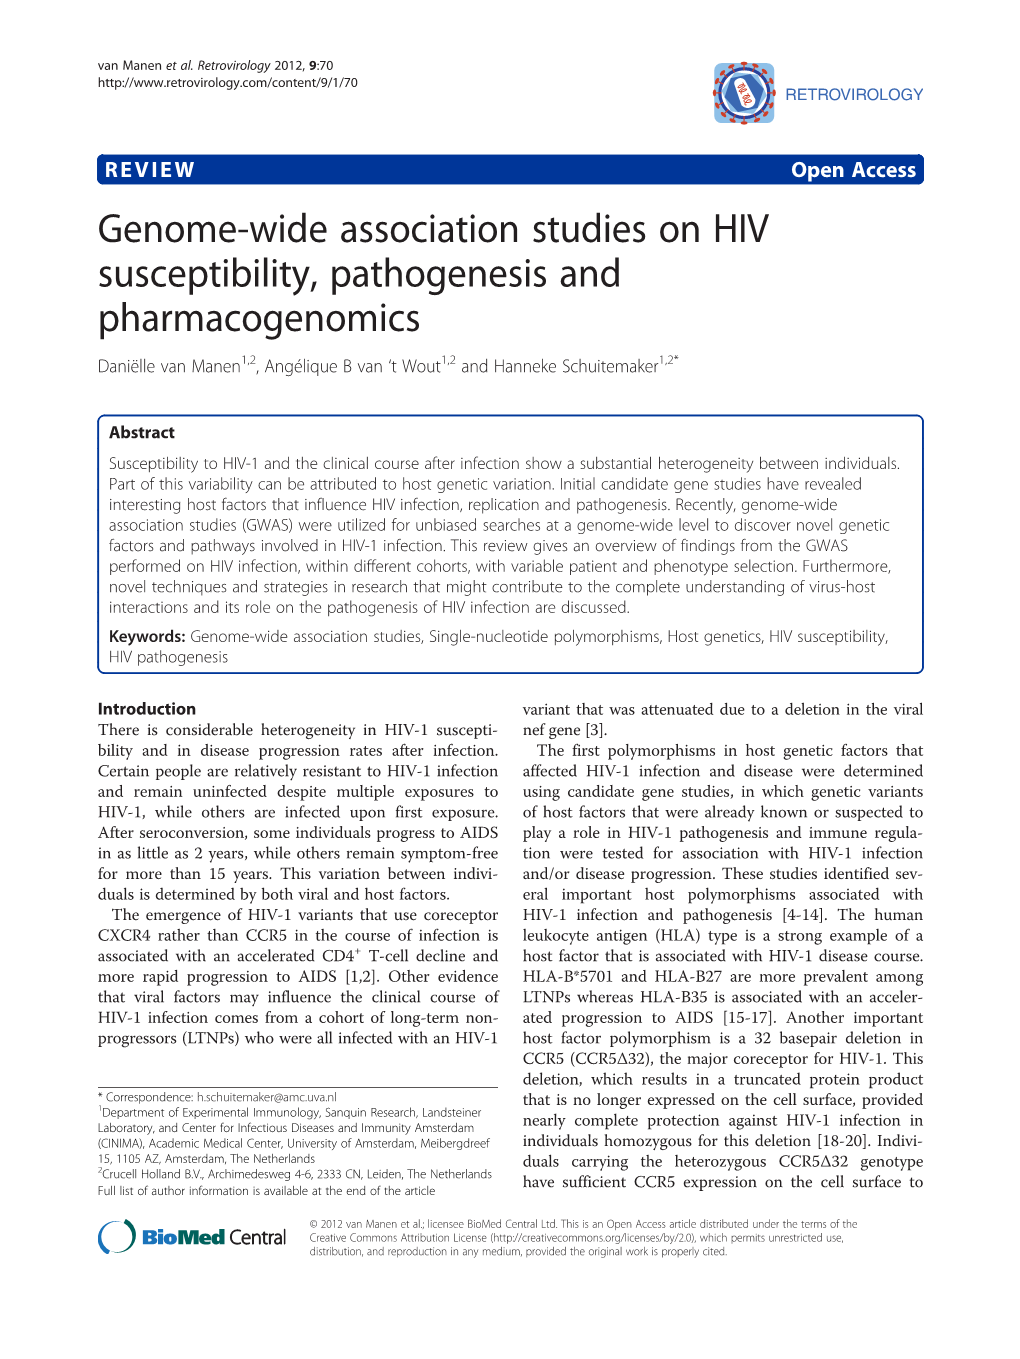 Genome-Wide Association Studies on HIV Susceptibility, Pathogenesis